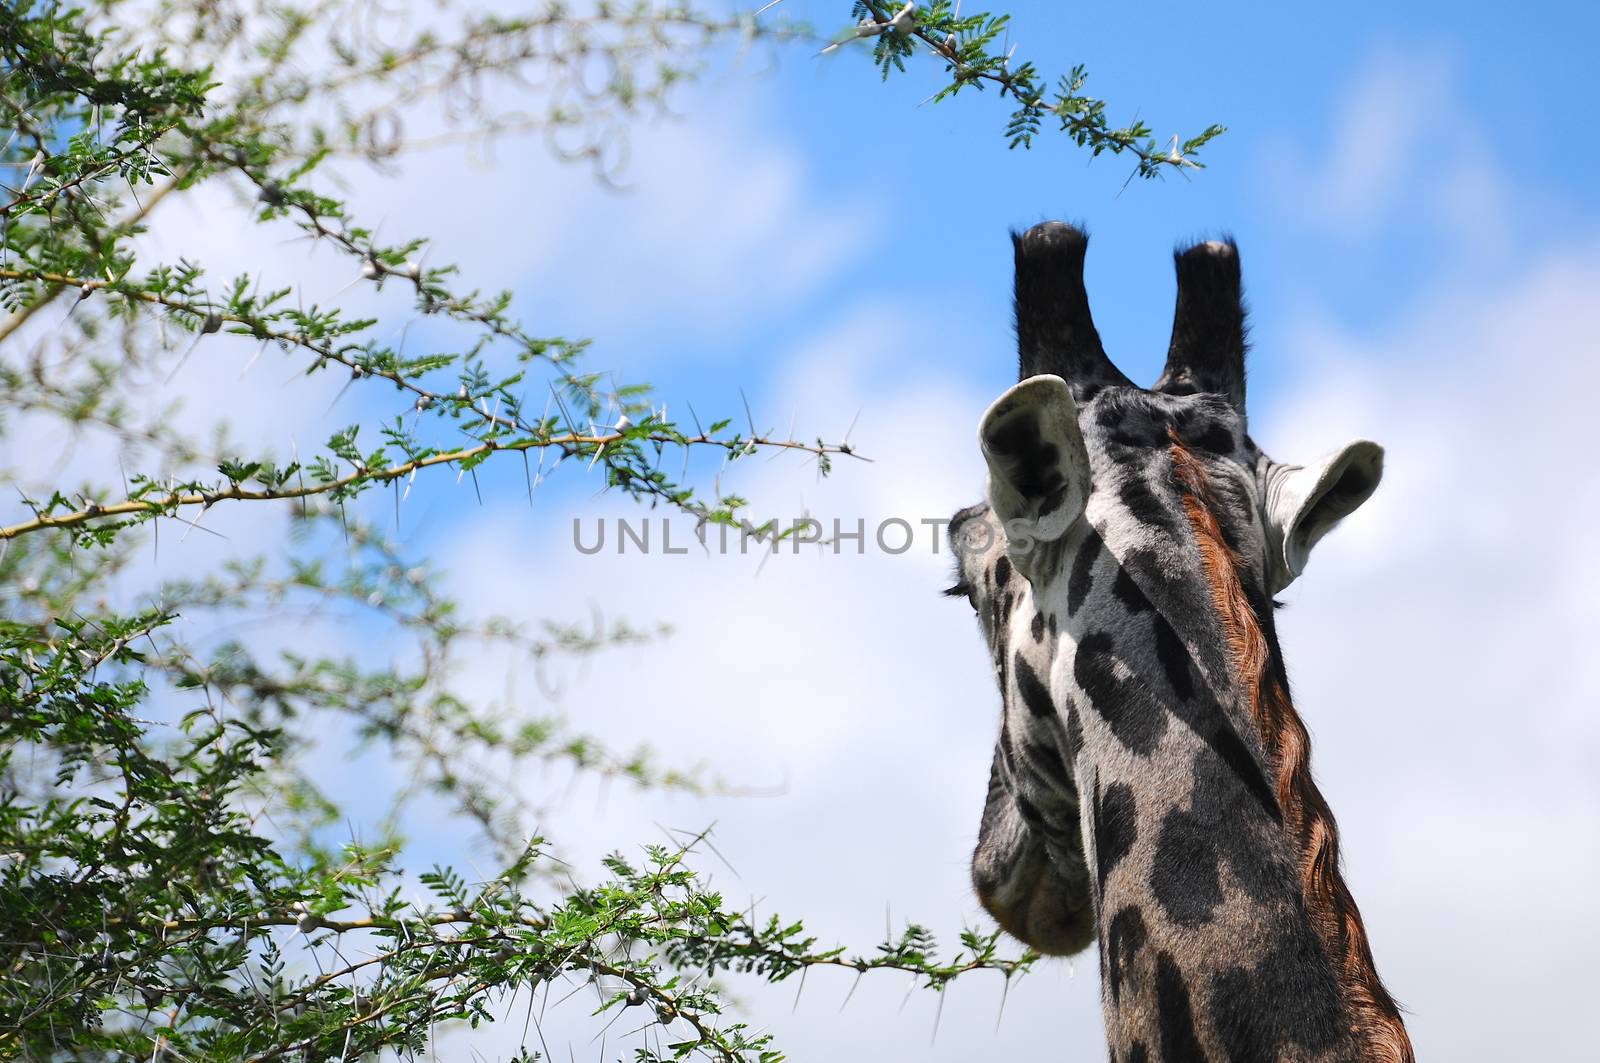 giraffe in national park Tanzania by moizhusein